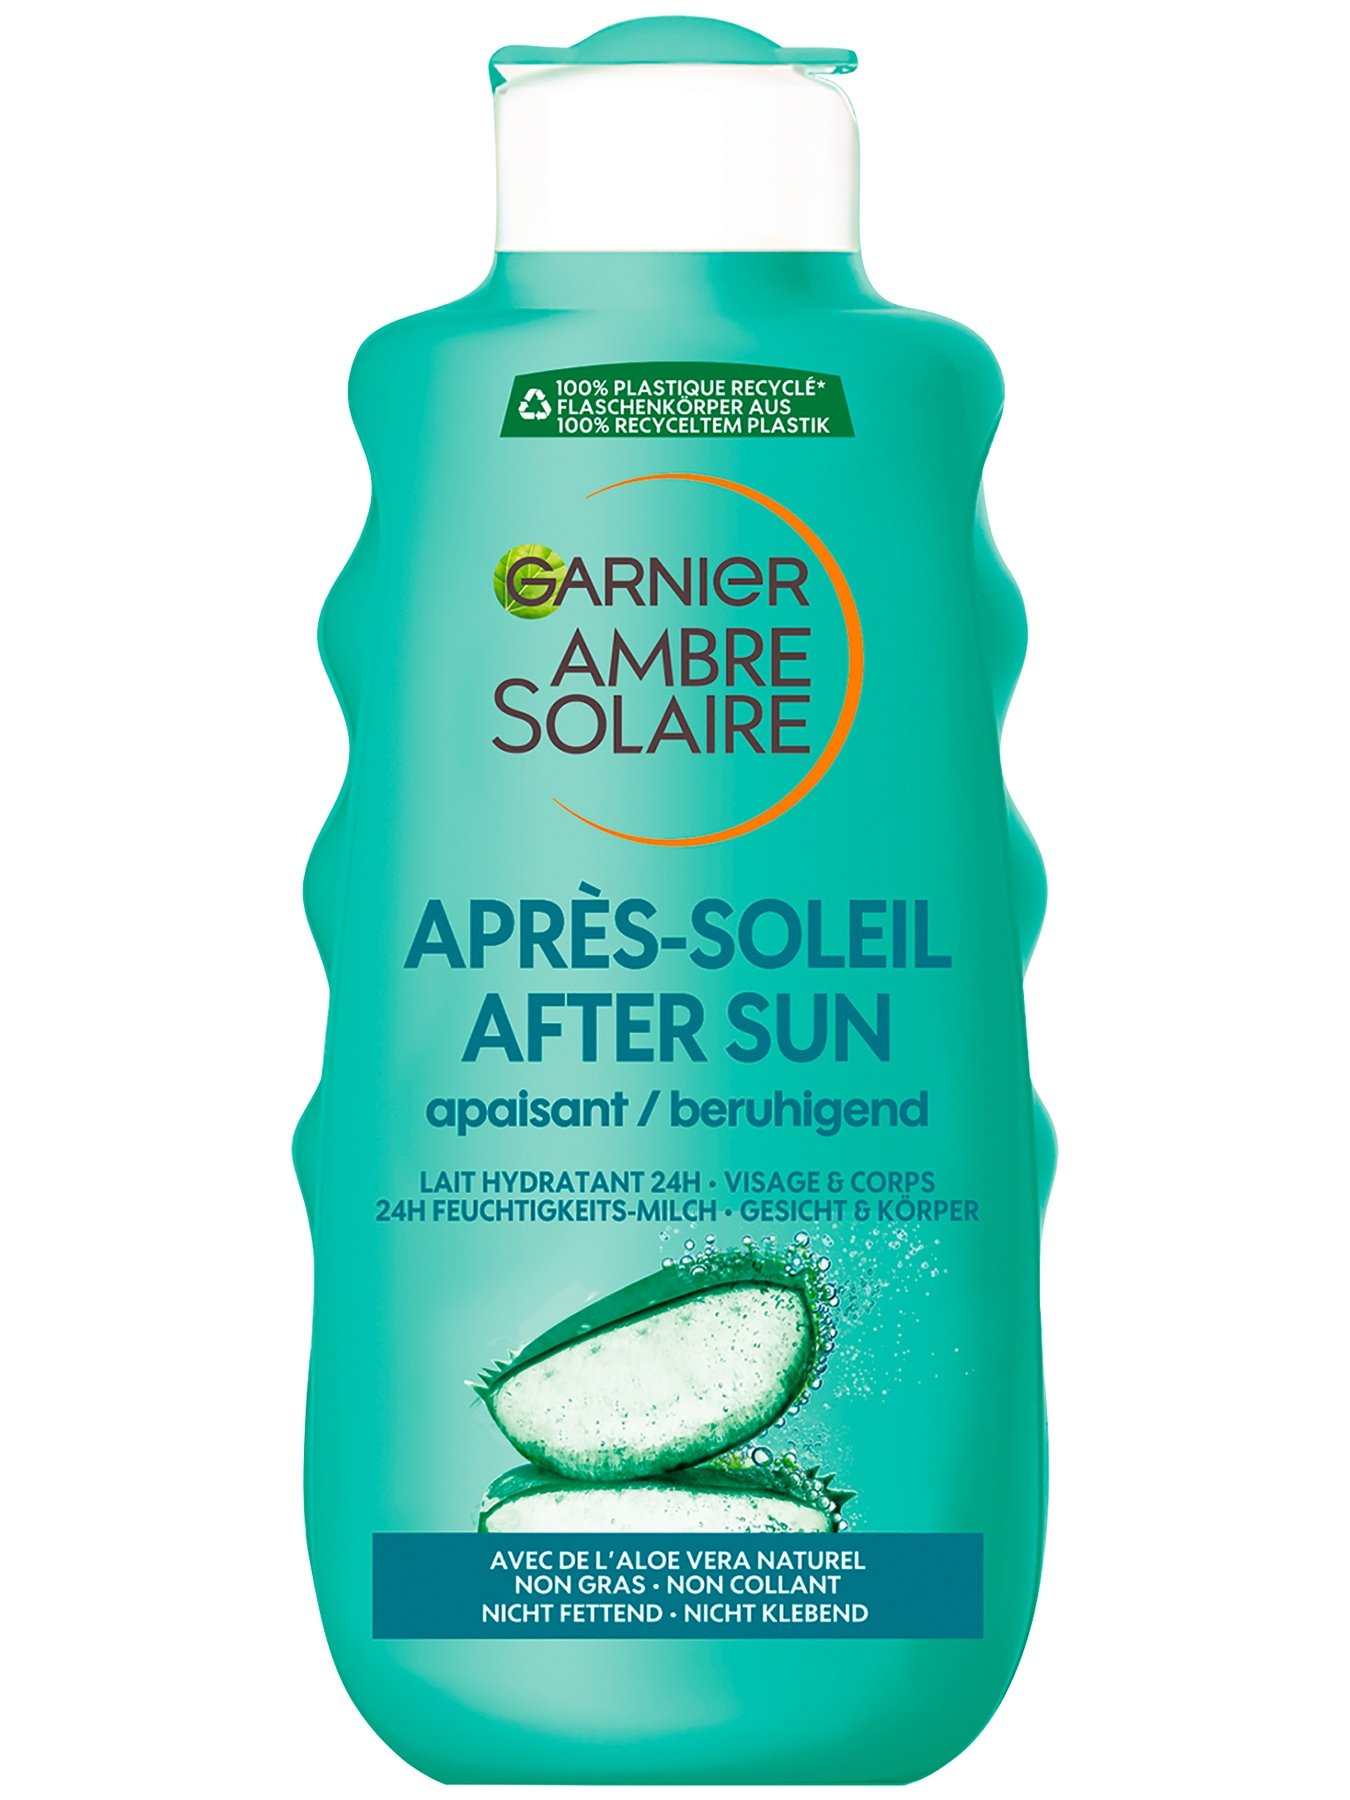 Ambre Solaire After Sun 24h Feuchtigkeits-Milch 200ml - Produktabbildung